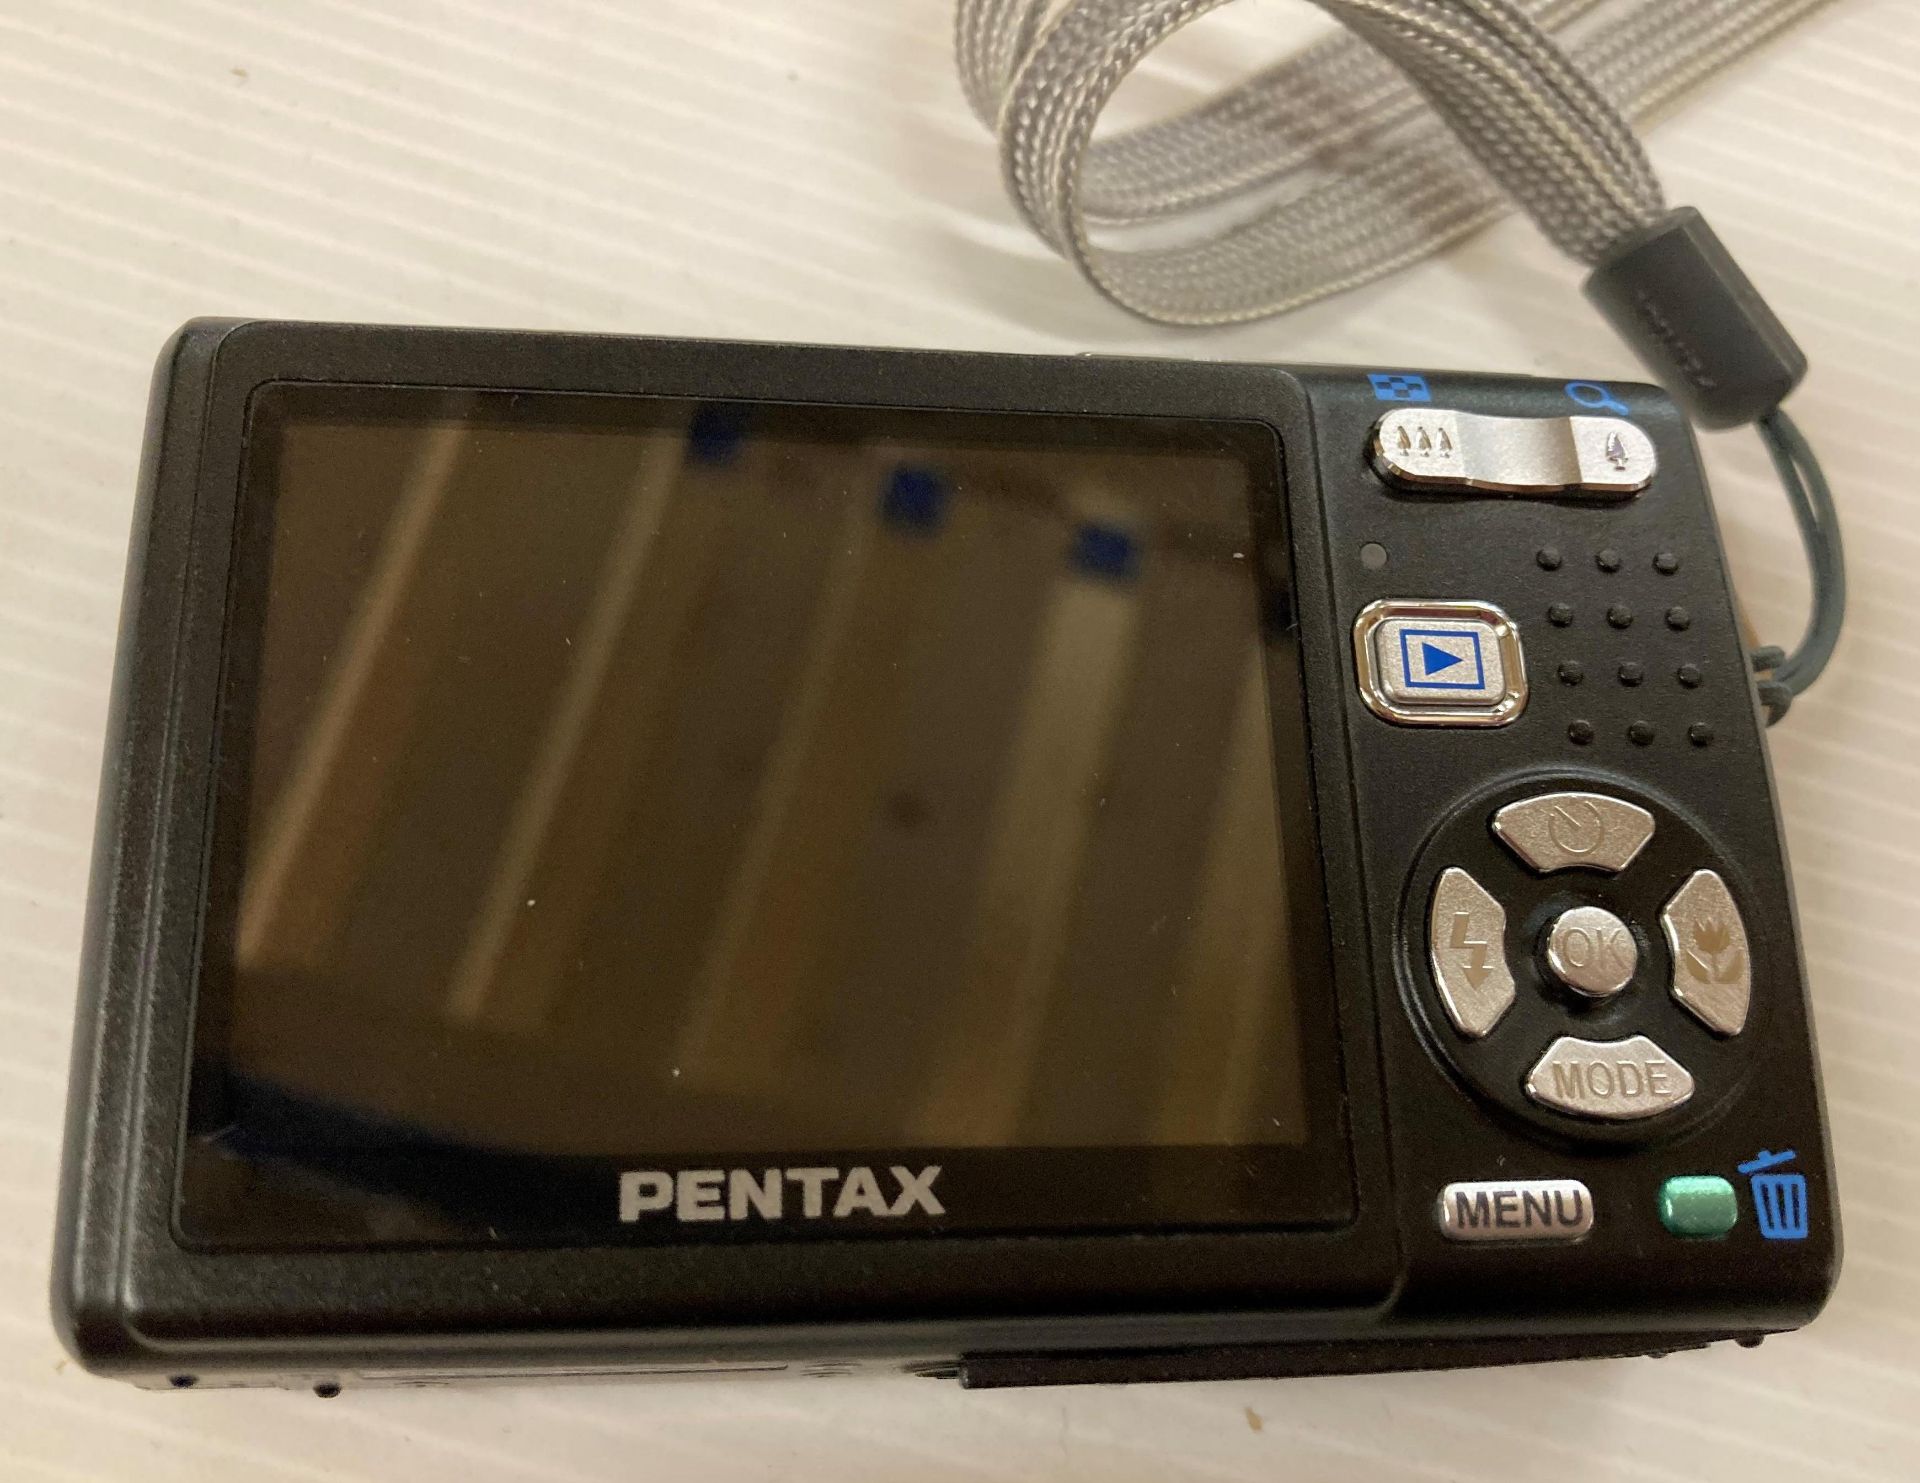 Pentax Optio A30 SR 10 mp 3 x zoom digital camera (saleroom location: R11) - Image 2 of 2